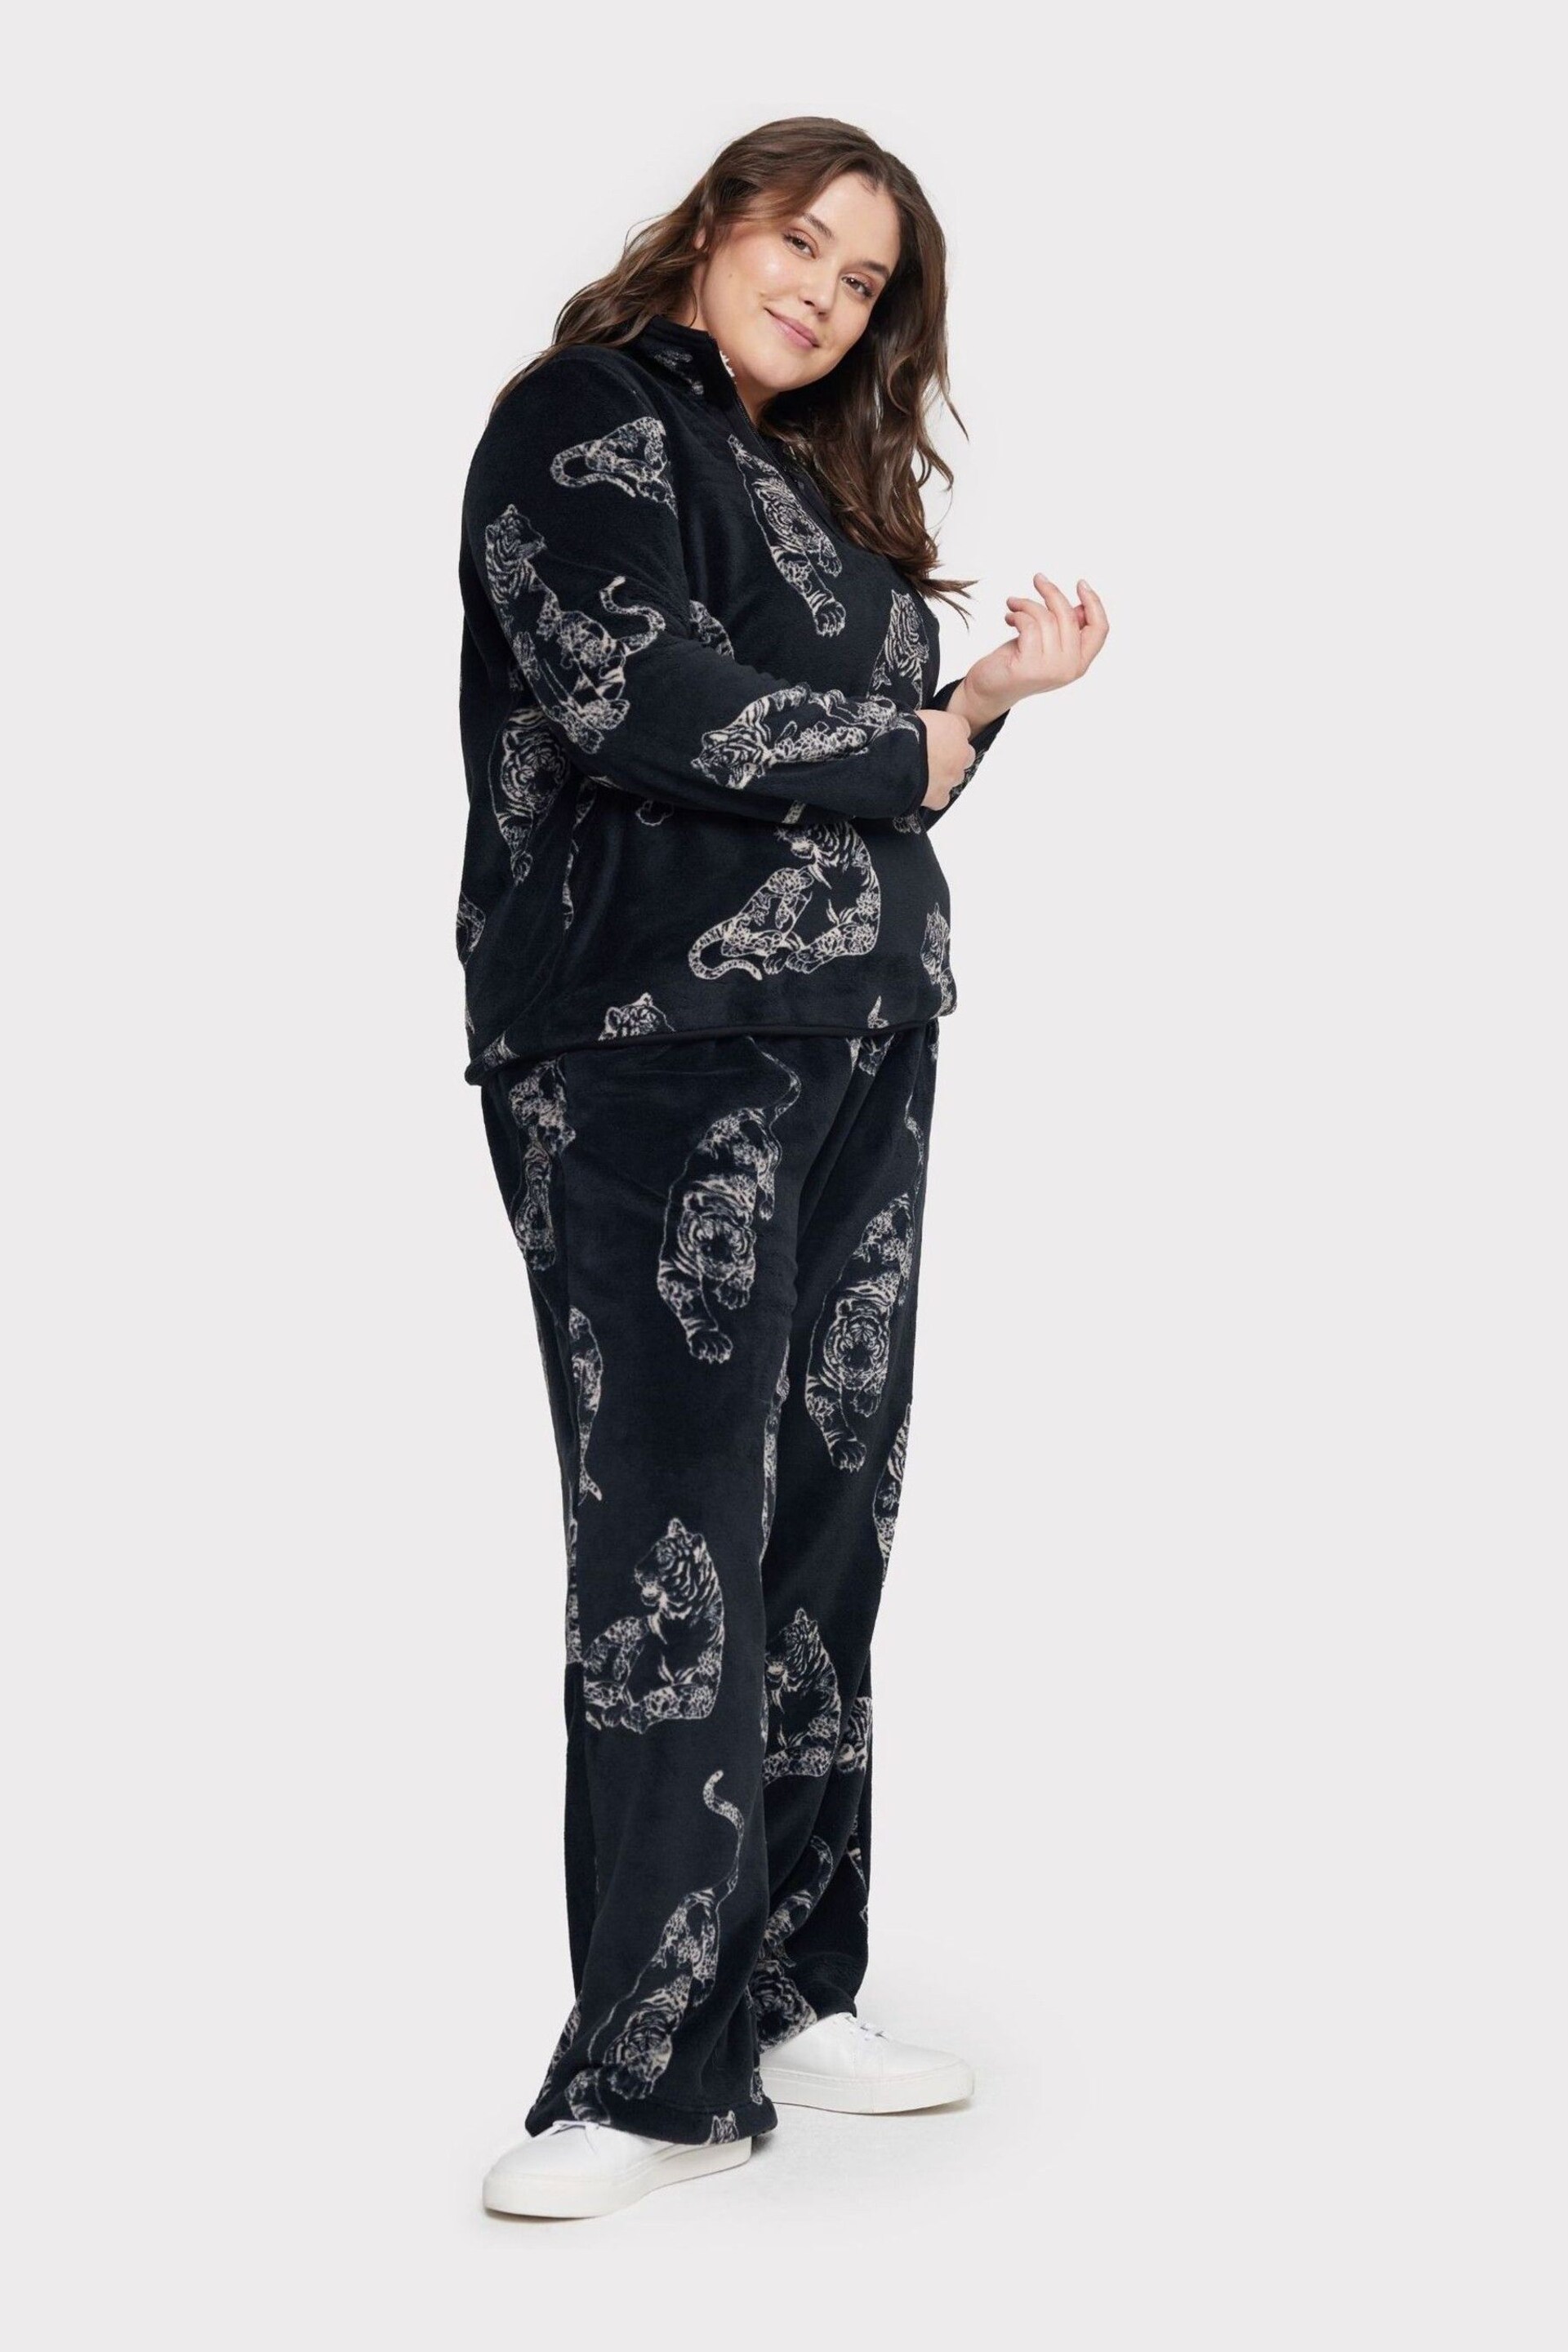 Chelsea Peers Black Curve Fleece Linear Tiger Print Co-ord Set - Image 3 of 5